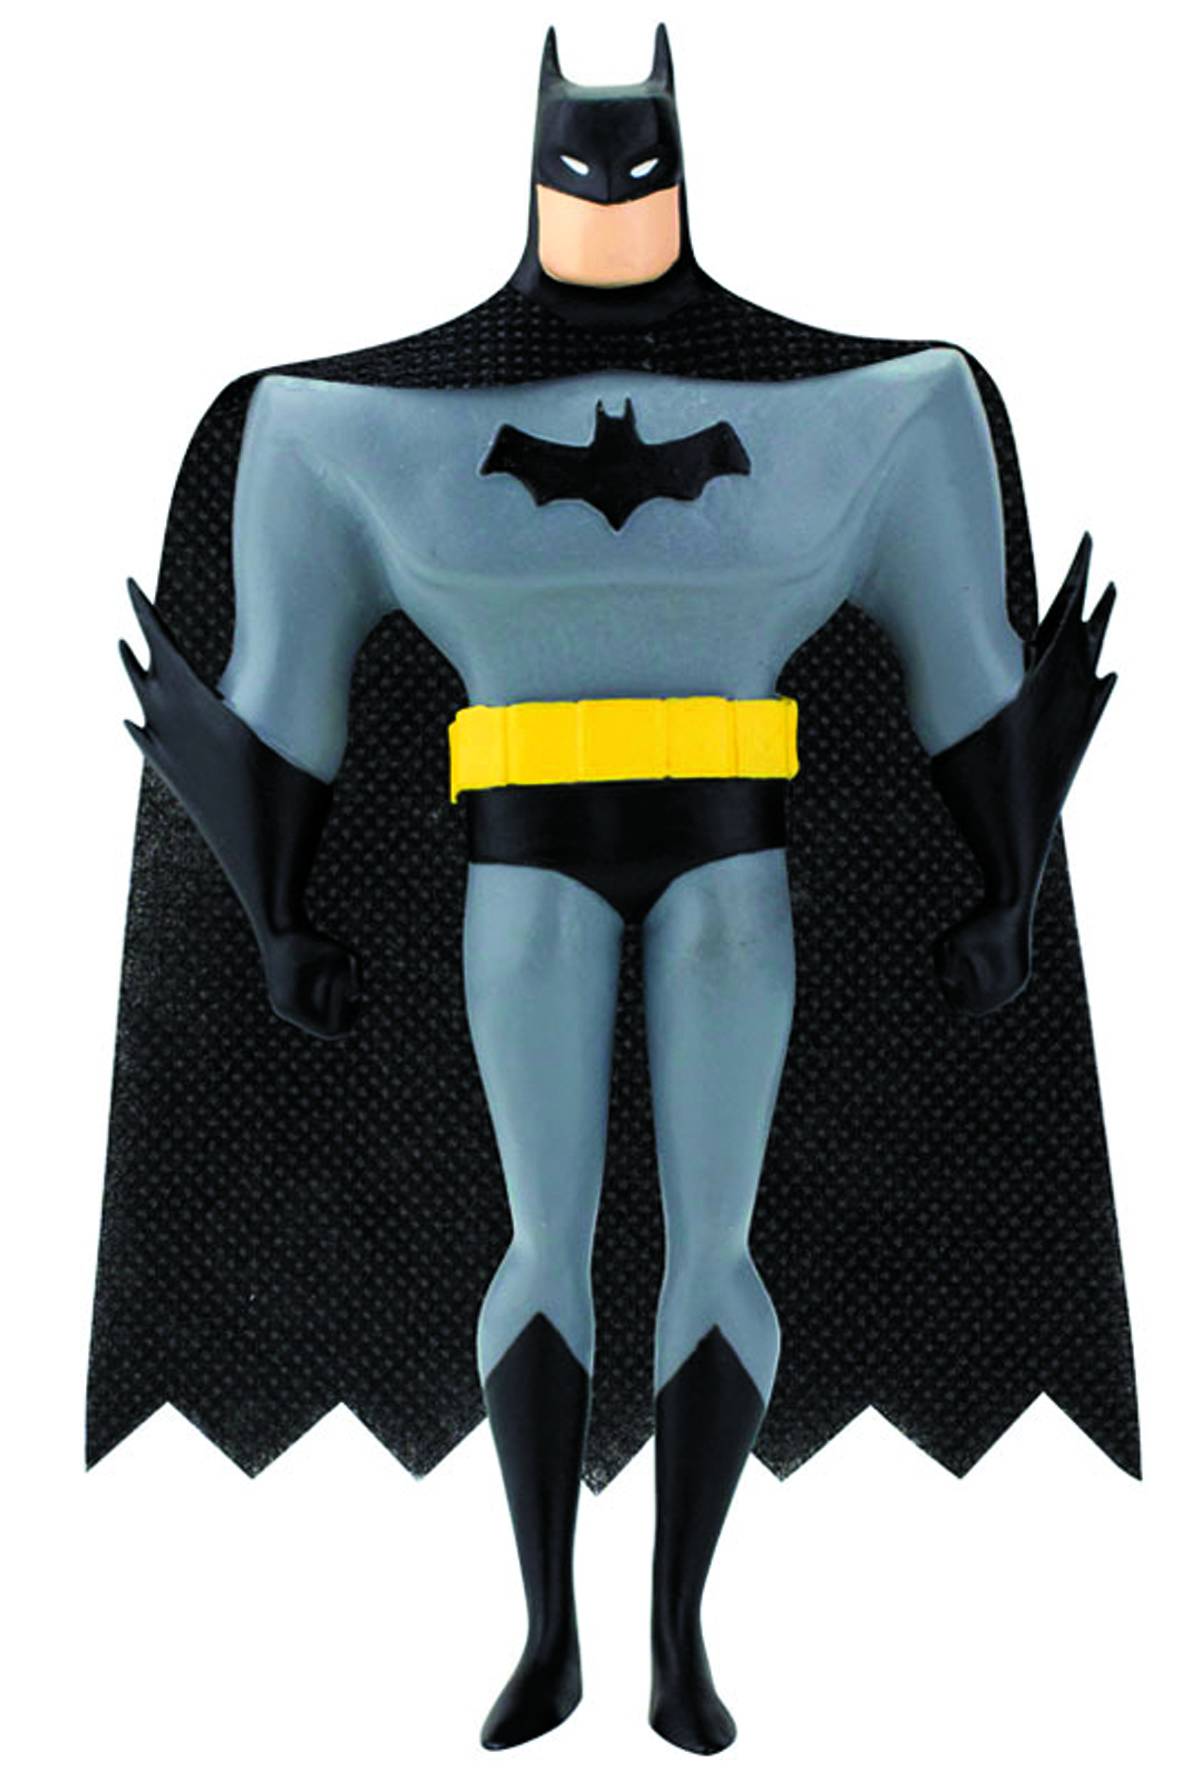 The new Batman Adventures "Batman" Bendable Figur 